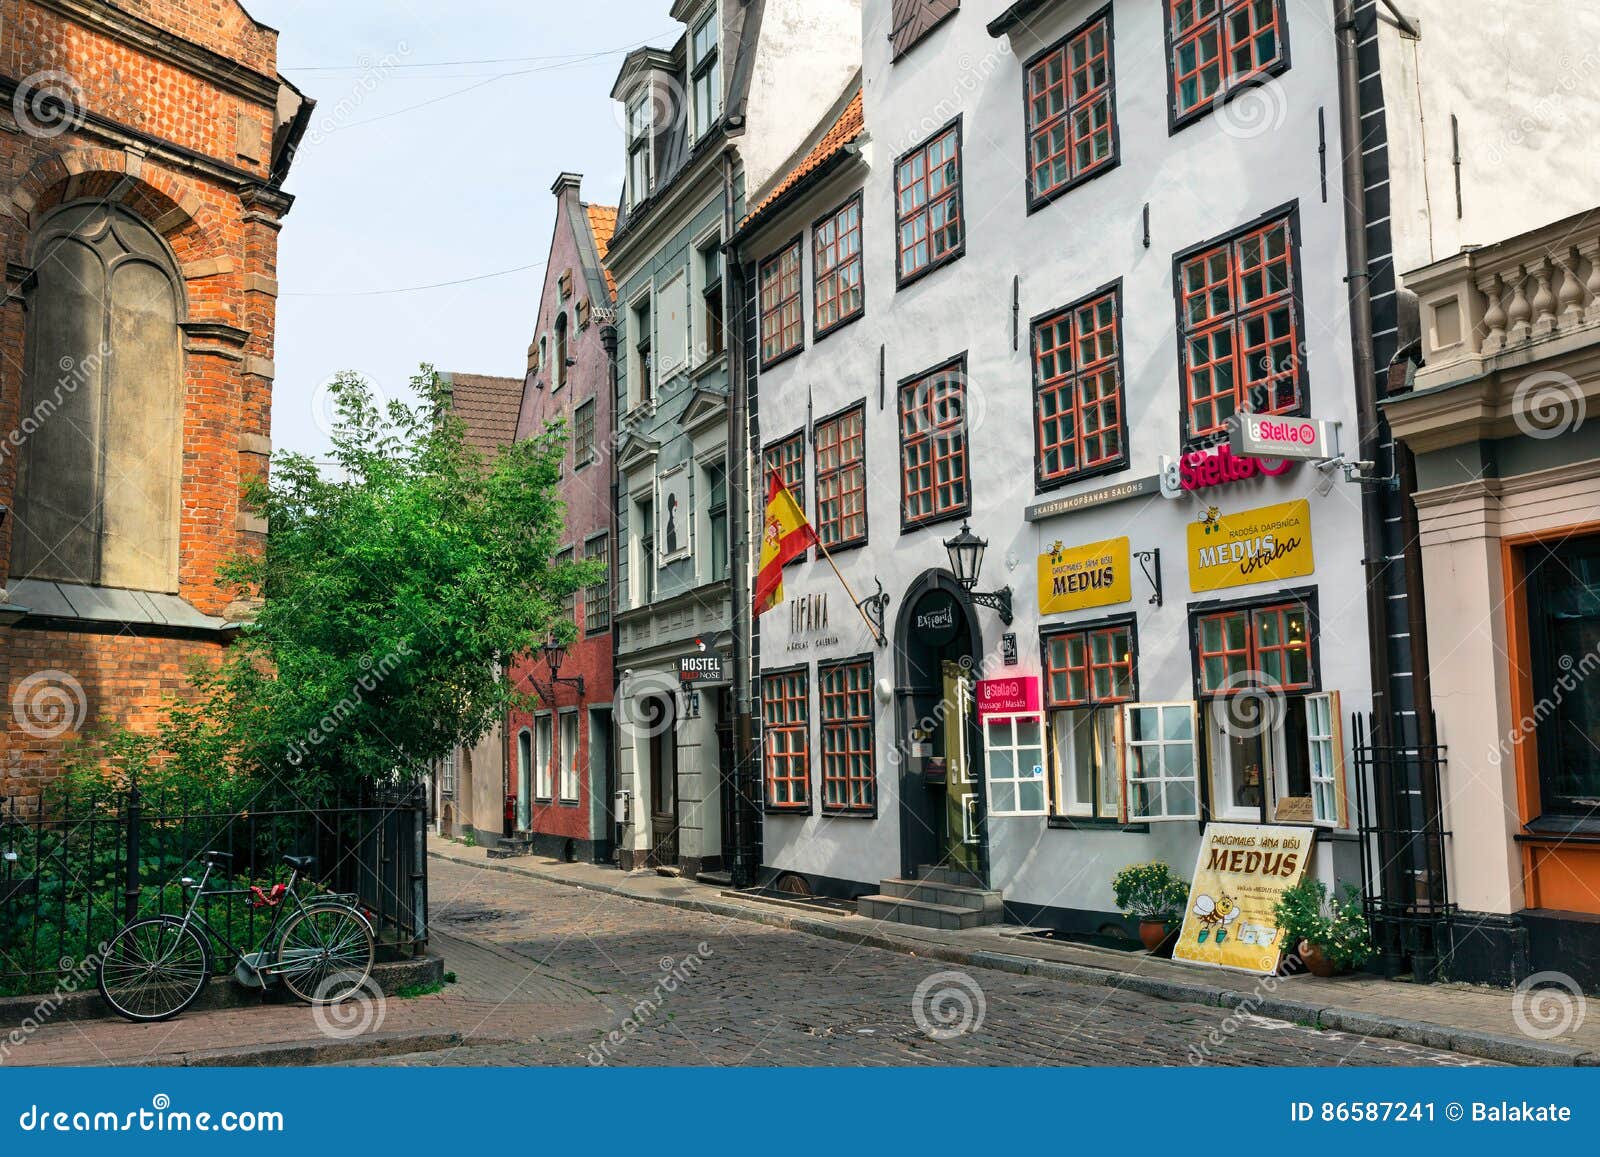 spise publikum Highland Medieval Houses on Jana Street in Summer. Old Riga, Latvia. Editorial Photo  - Image of europe, home: 86587241